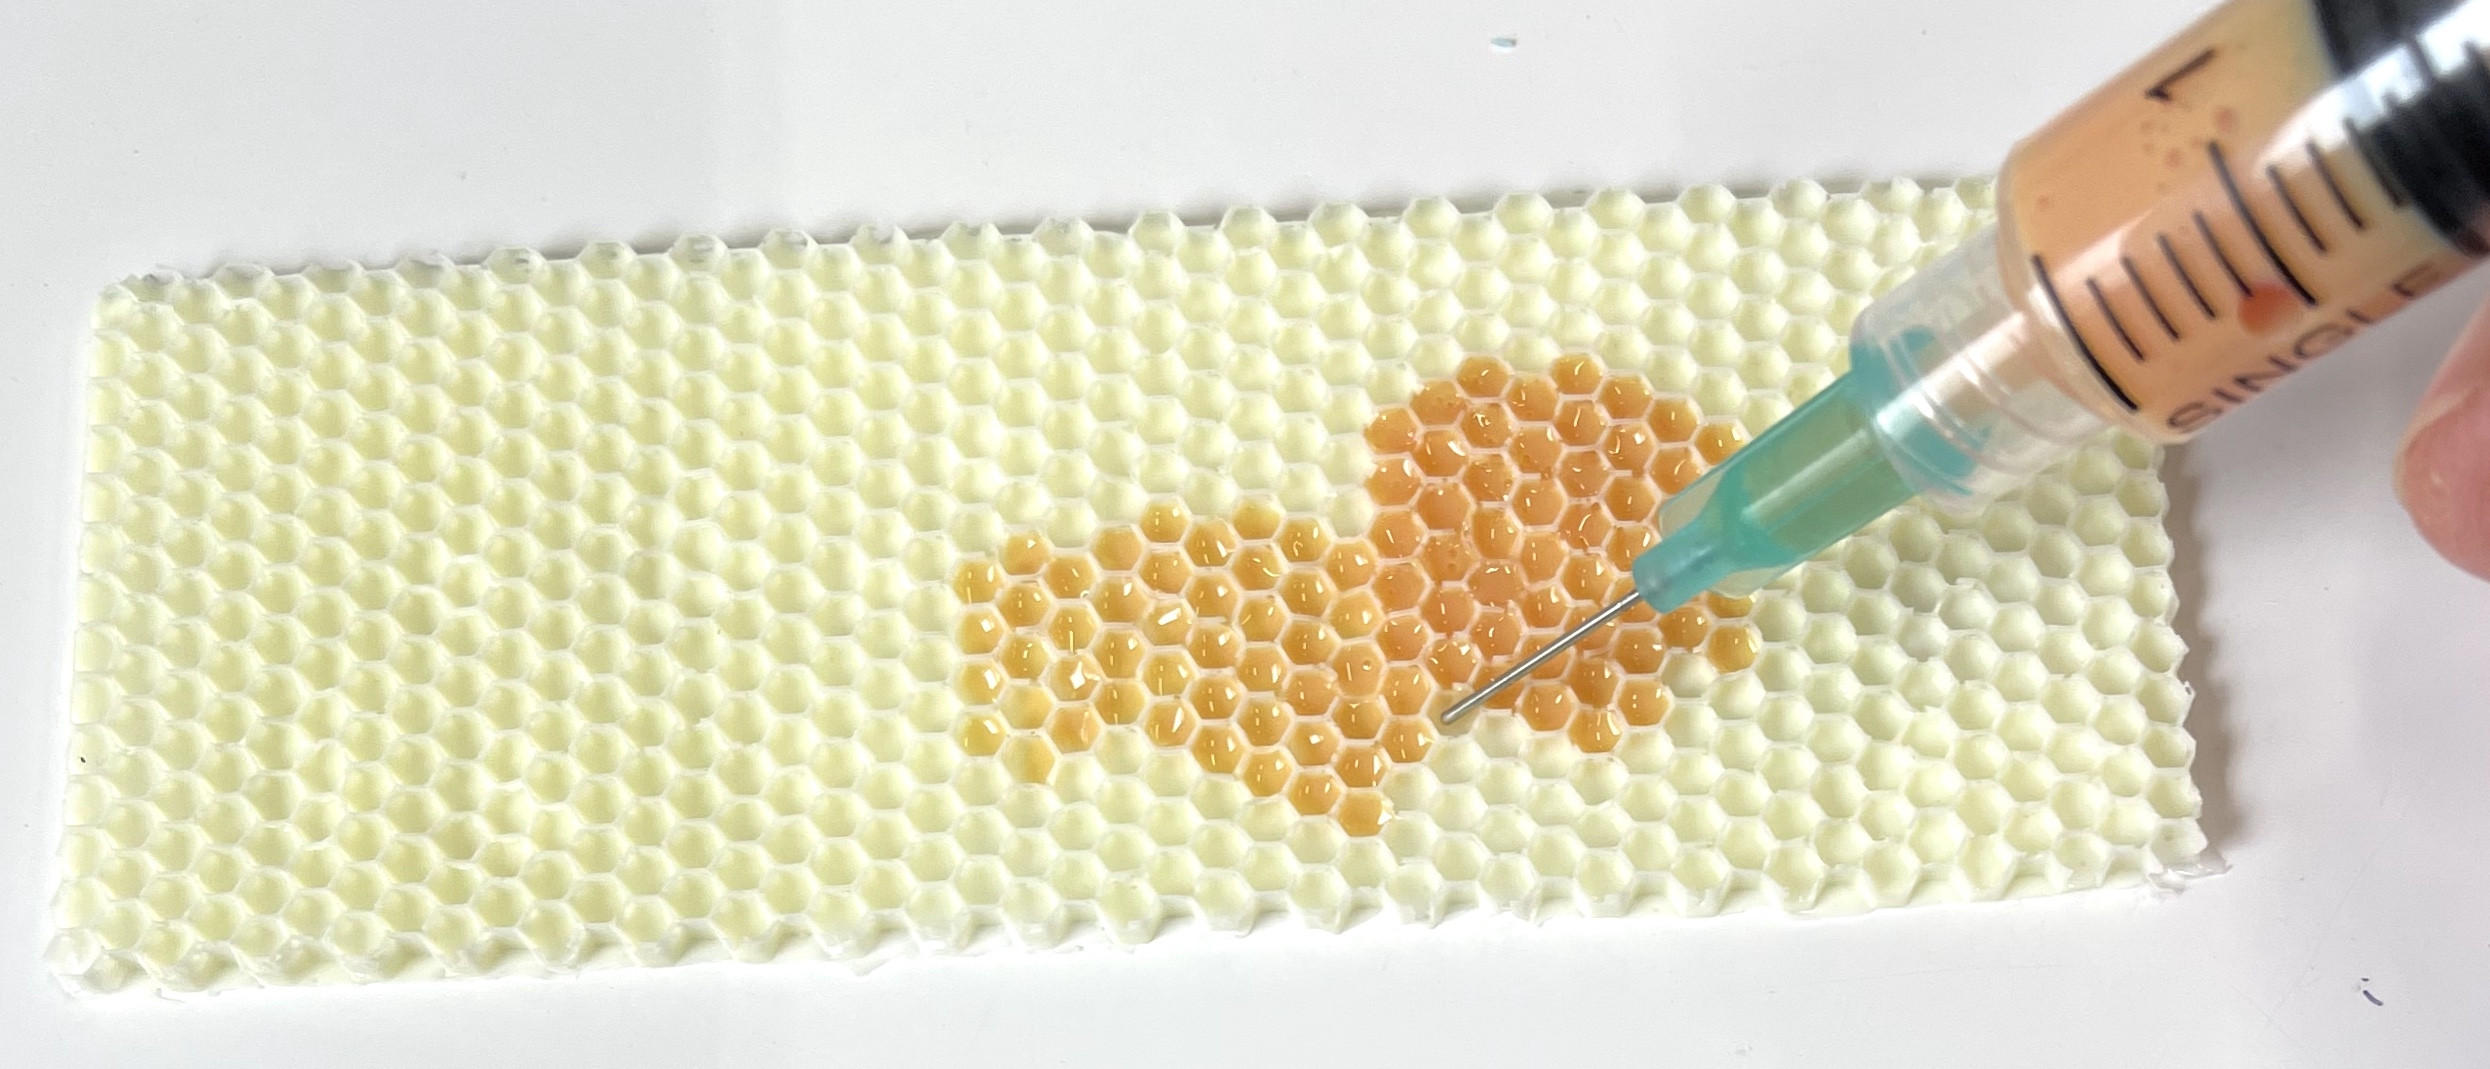 Honeycomb Mold – Starry Supplies